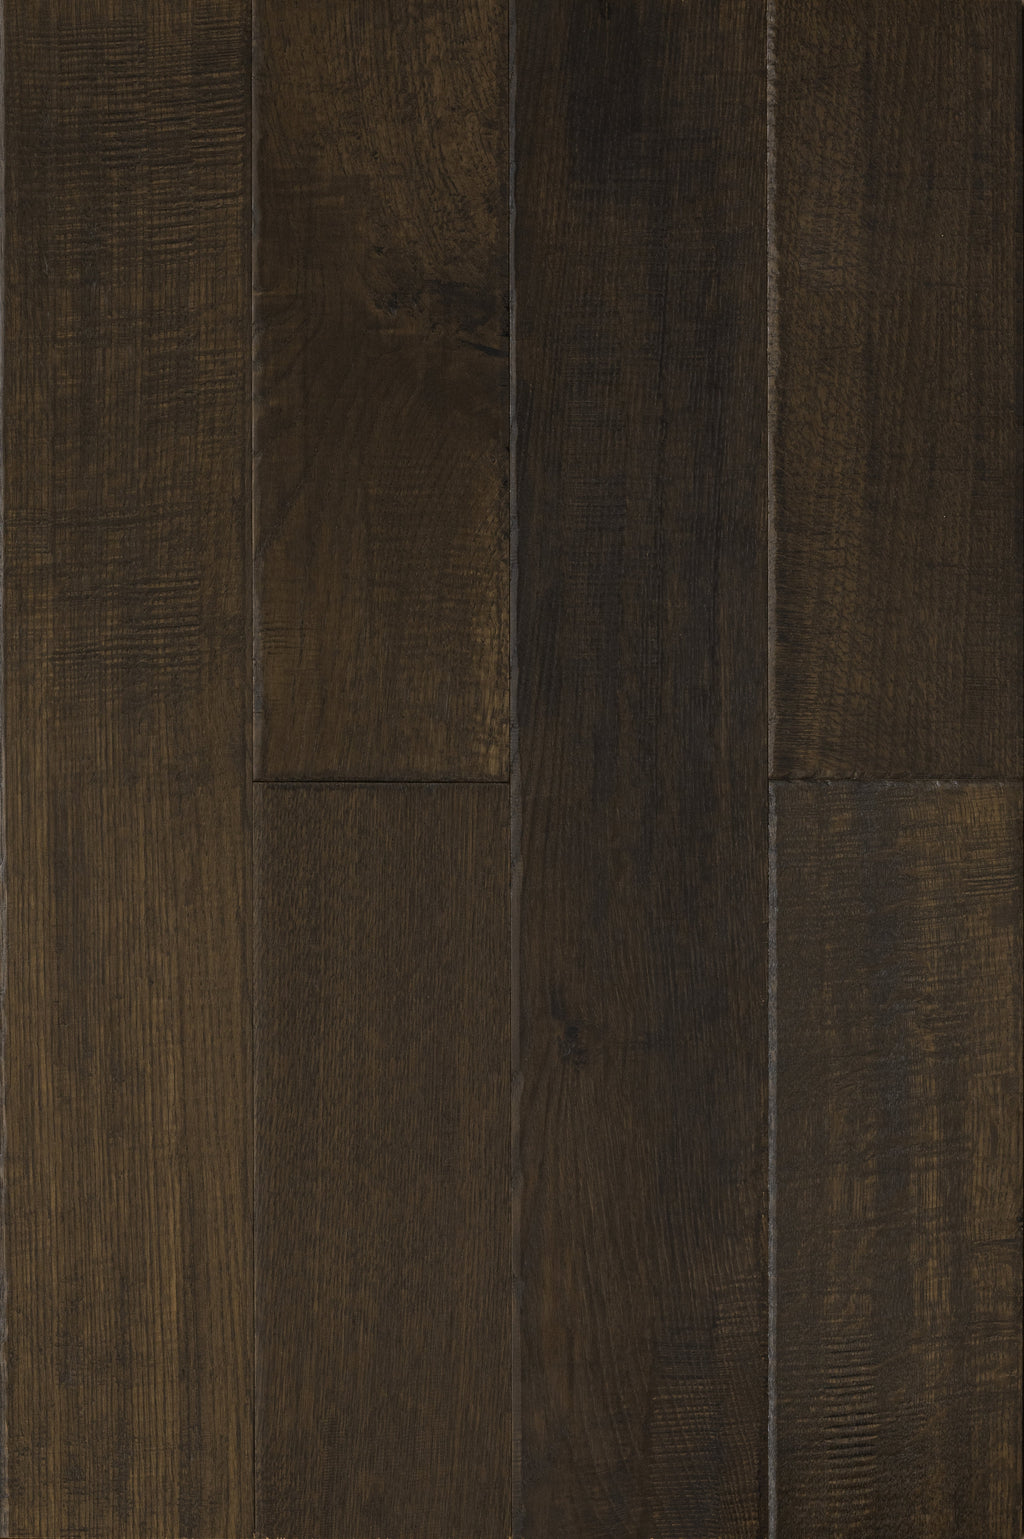 East West Furniture SP-5OH05 Sango Premier Engineered Wood Flooring - European Oak - 1/2 in x 7 in x Random Length Handscraped, 26.24 sqft/box, Shadow Grey